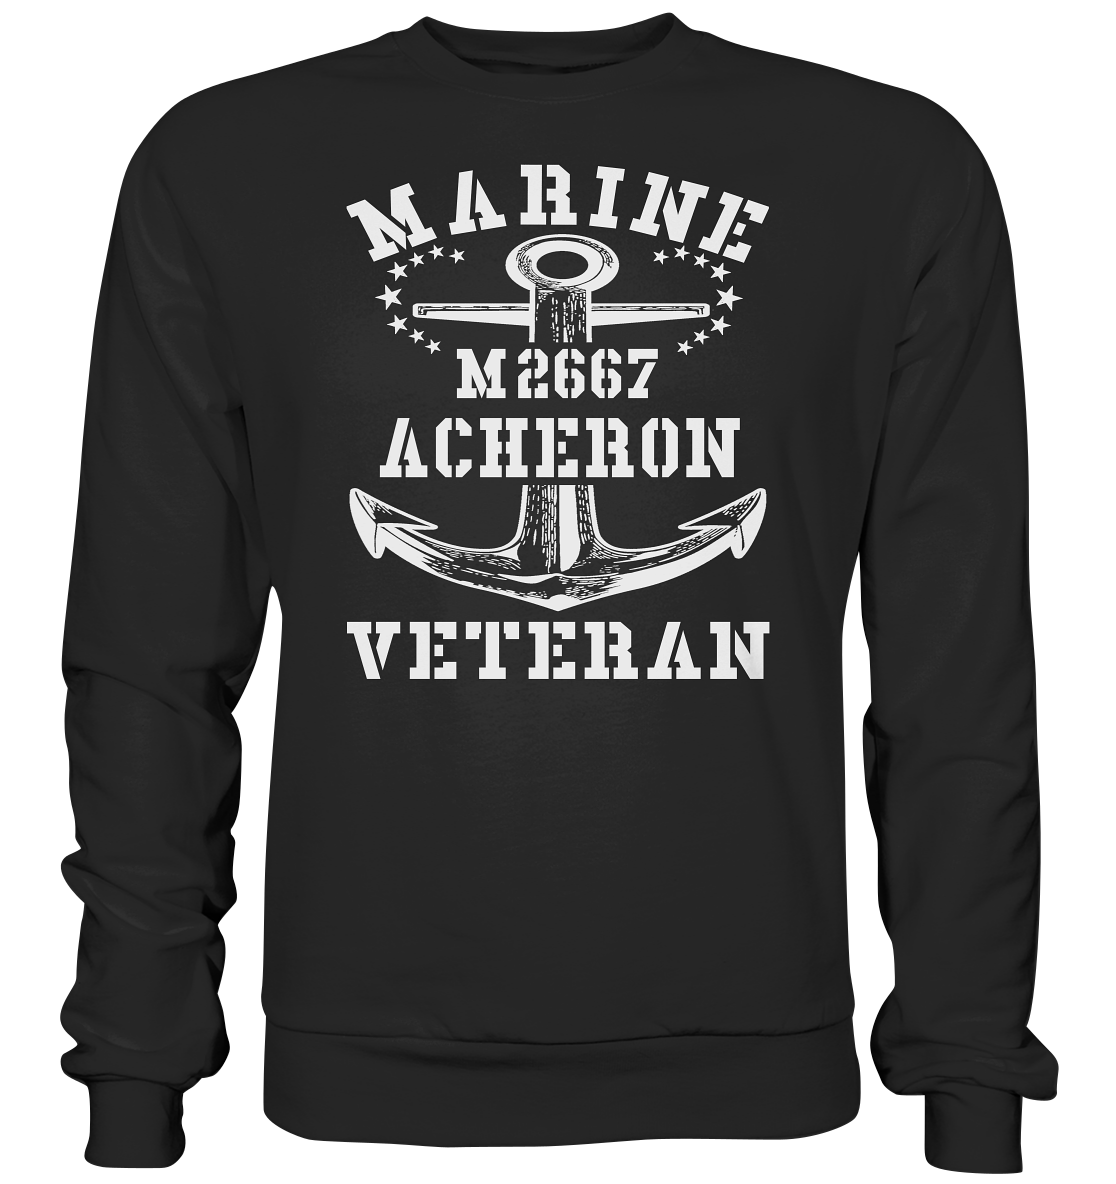 BiMi M2667 ACHERON Marine Veteran - Premium Sweatshirt